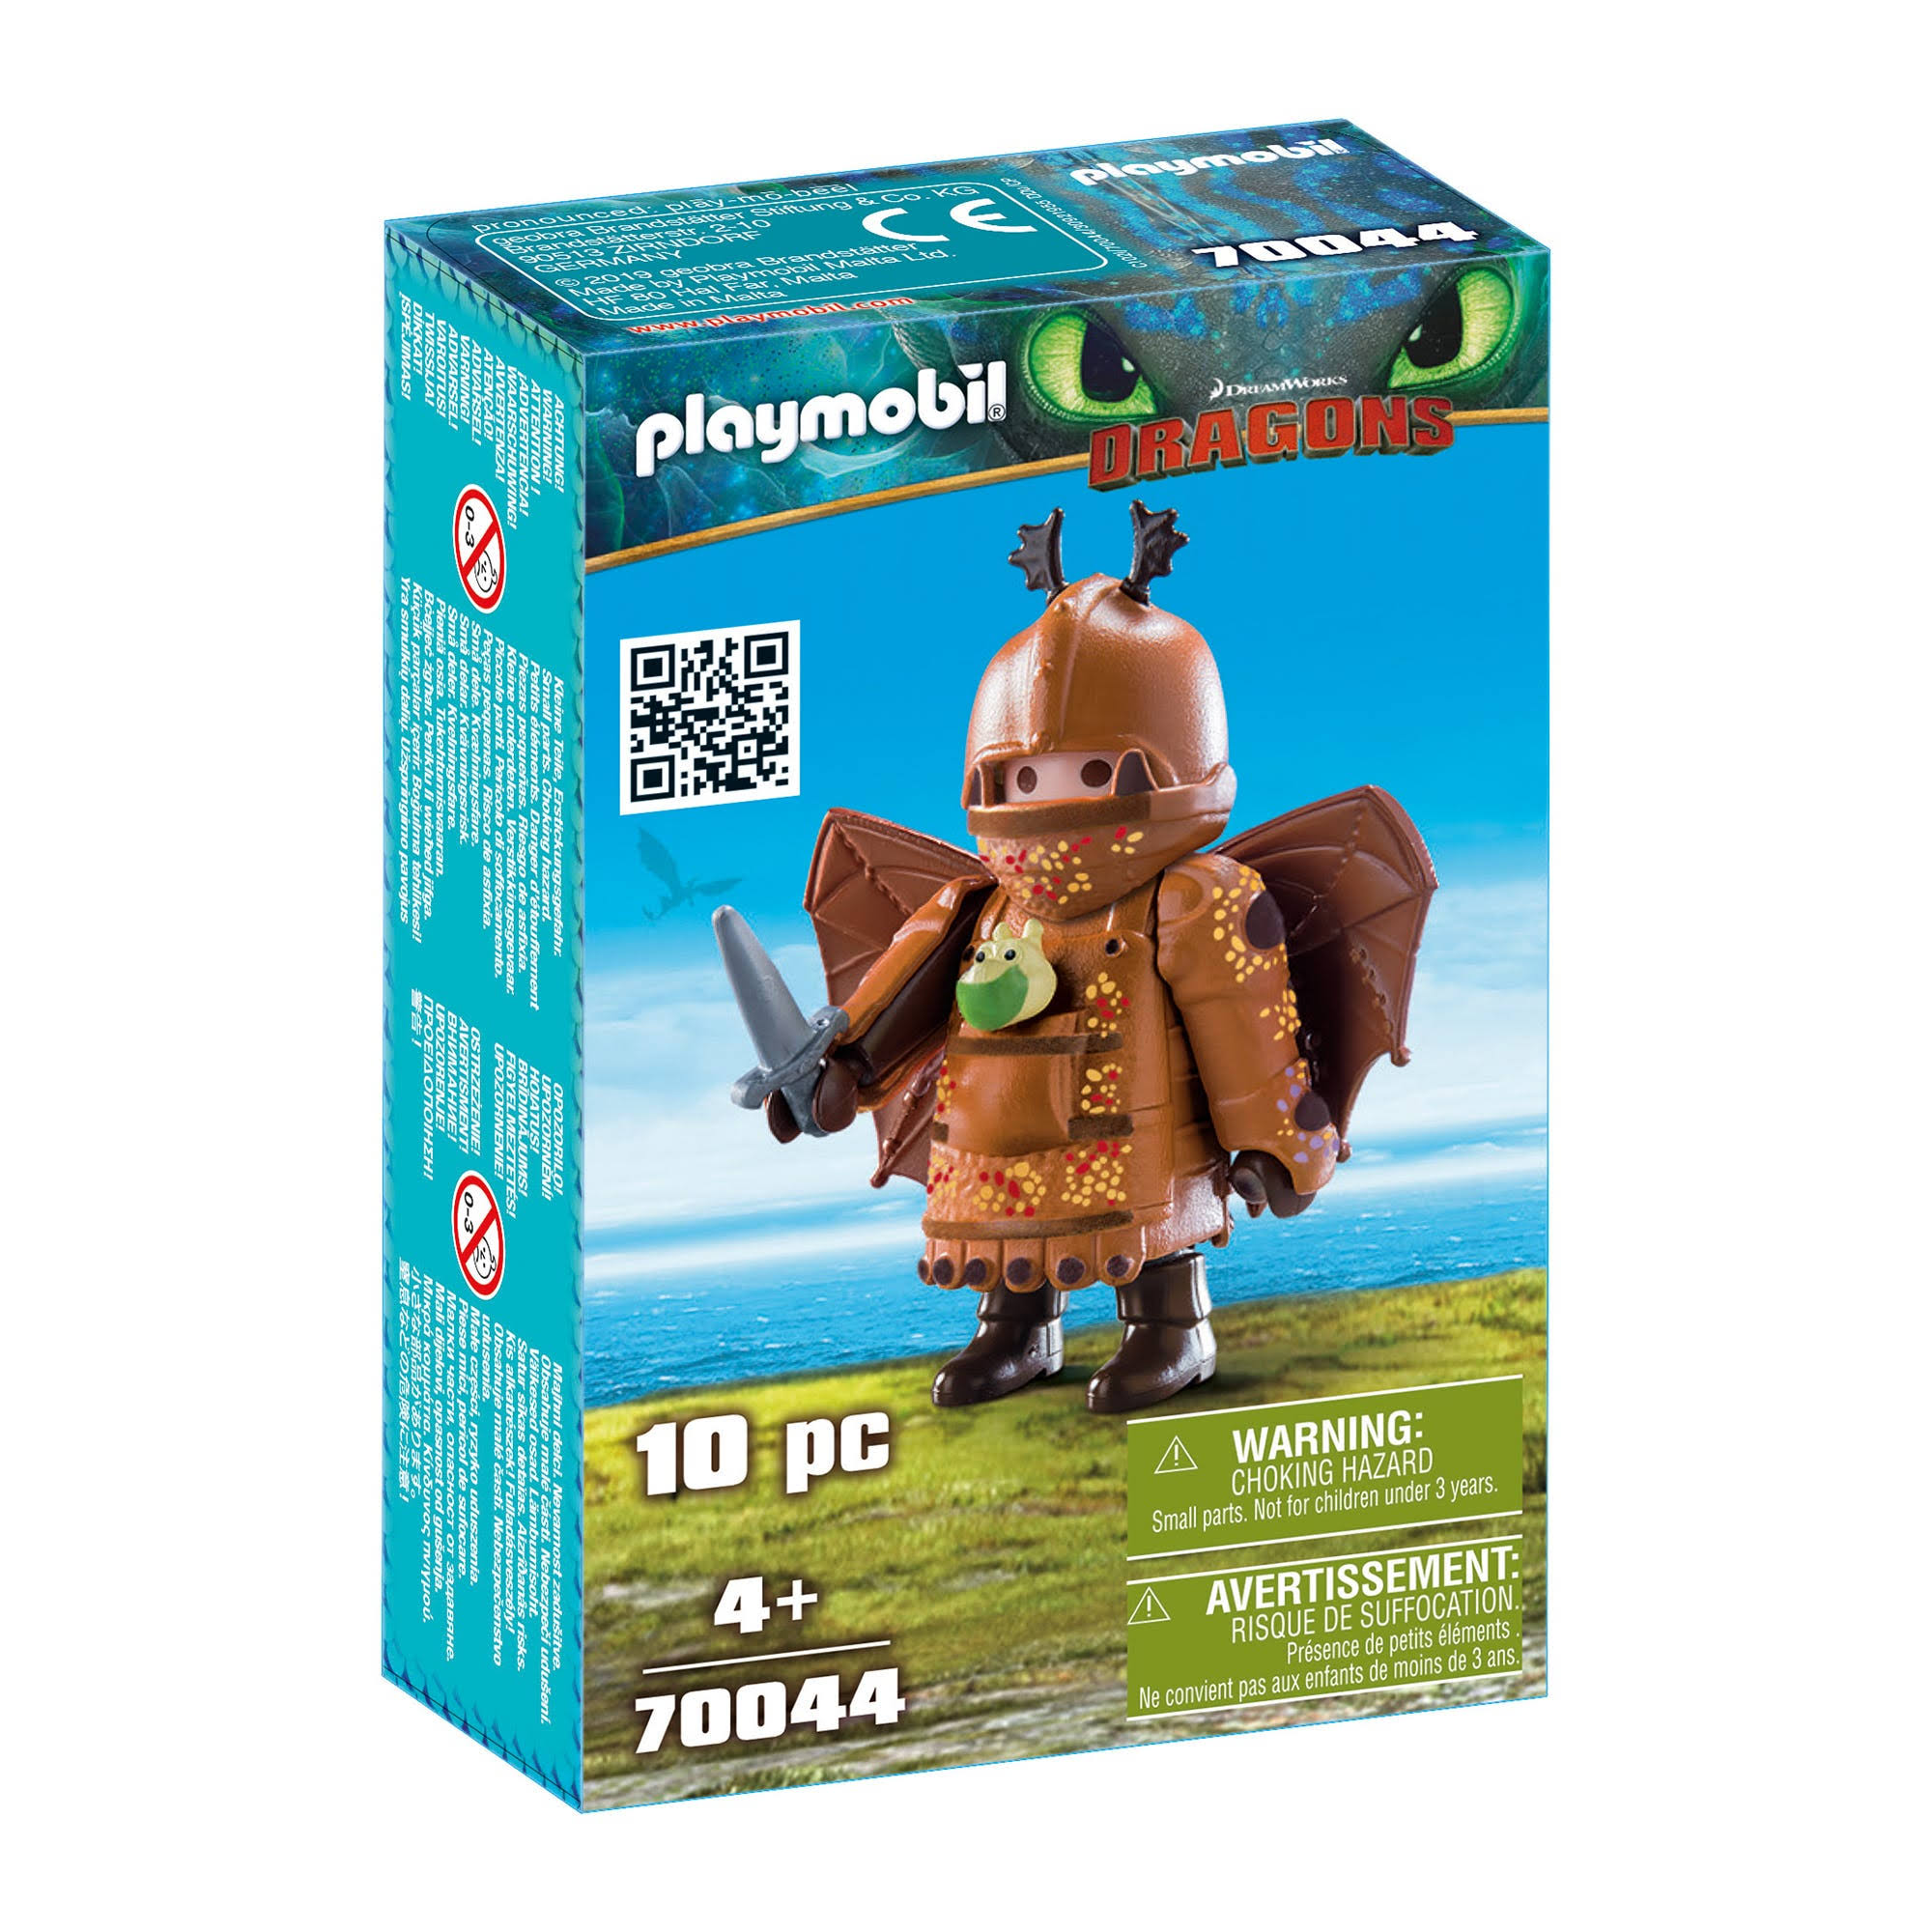 Playmobil 70044 Dreamworks Dragons Fishlegs - 10 Pieces